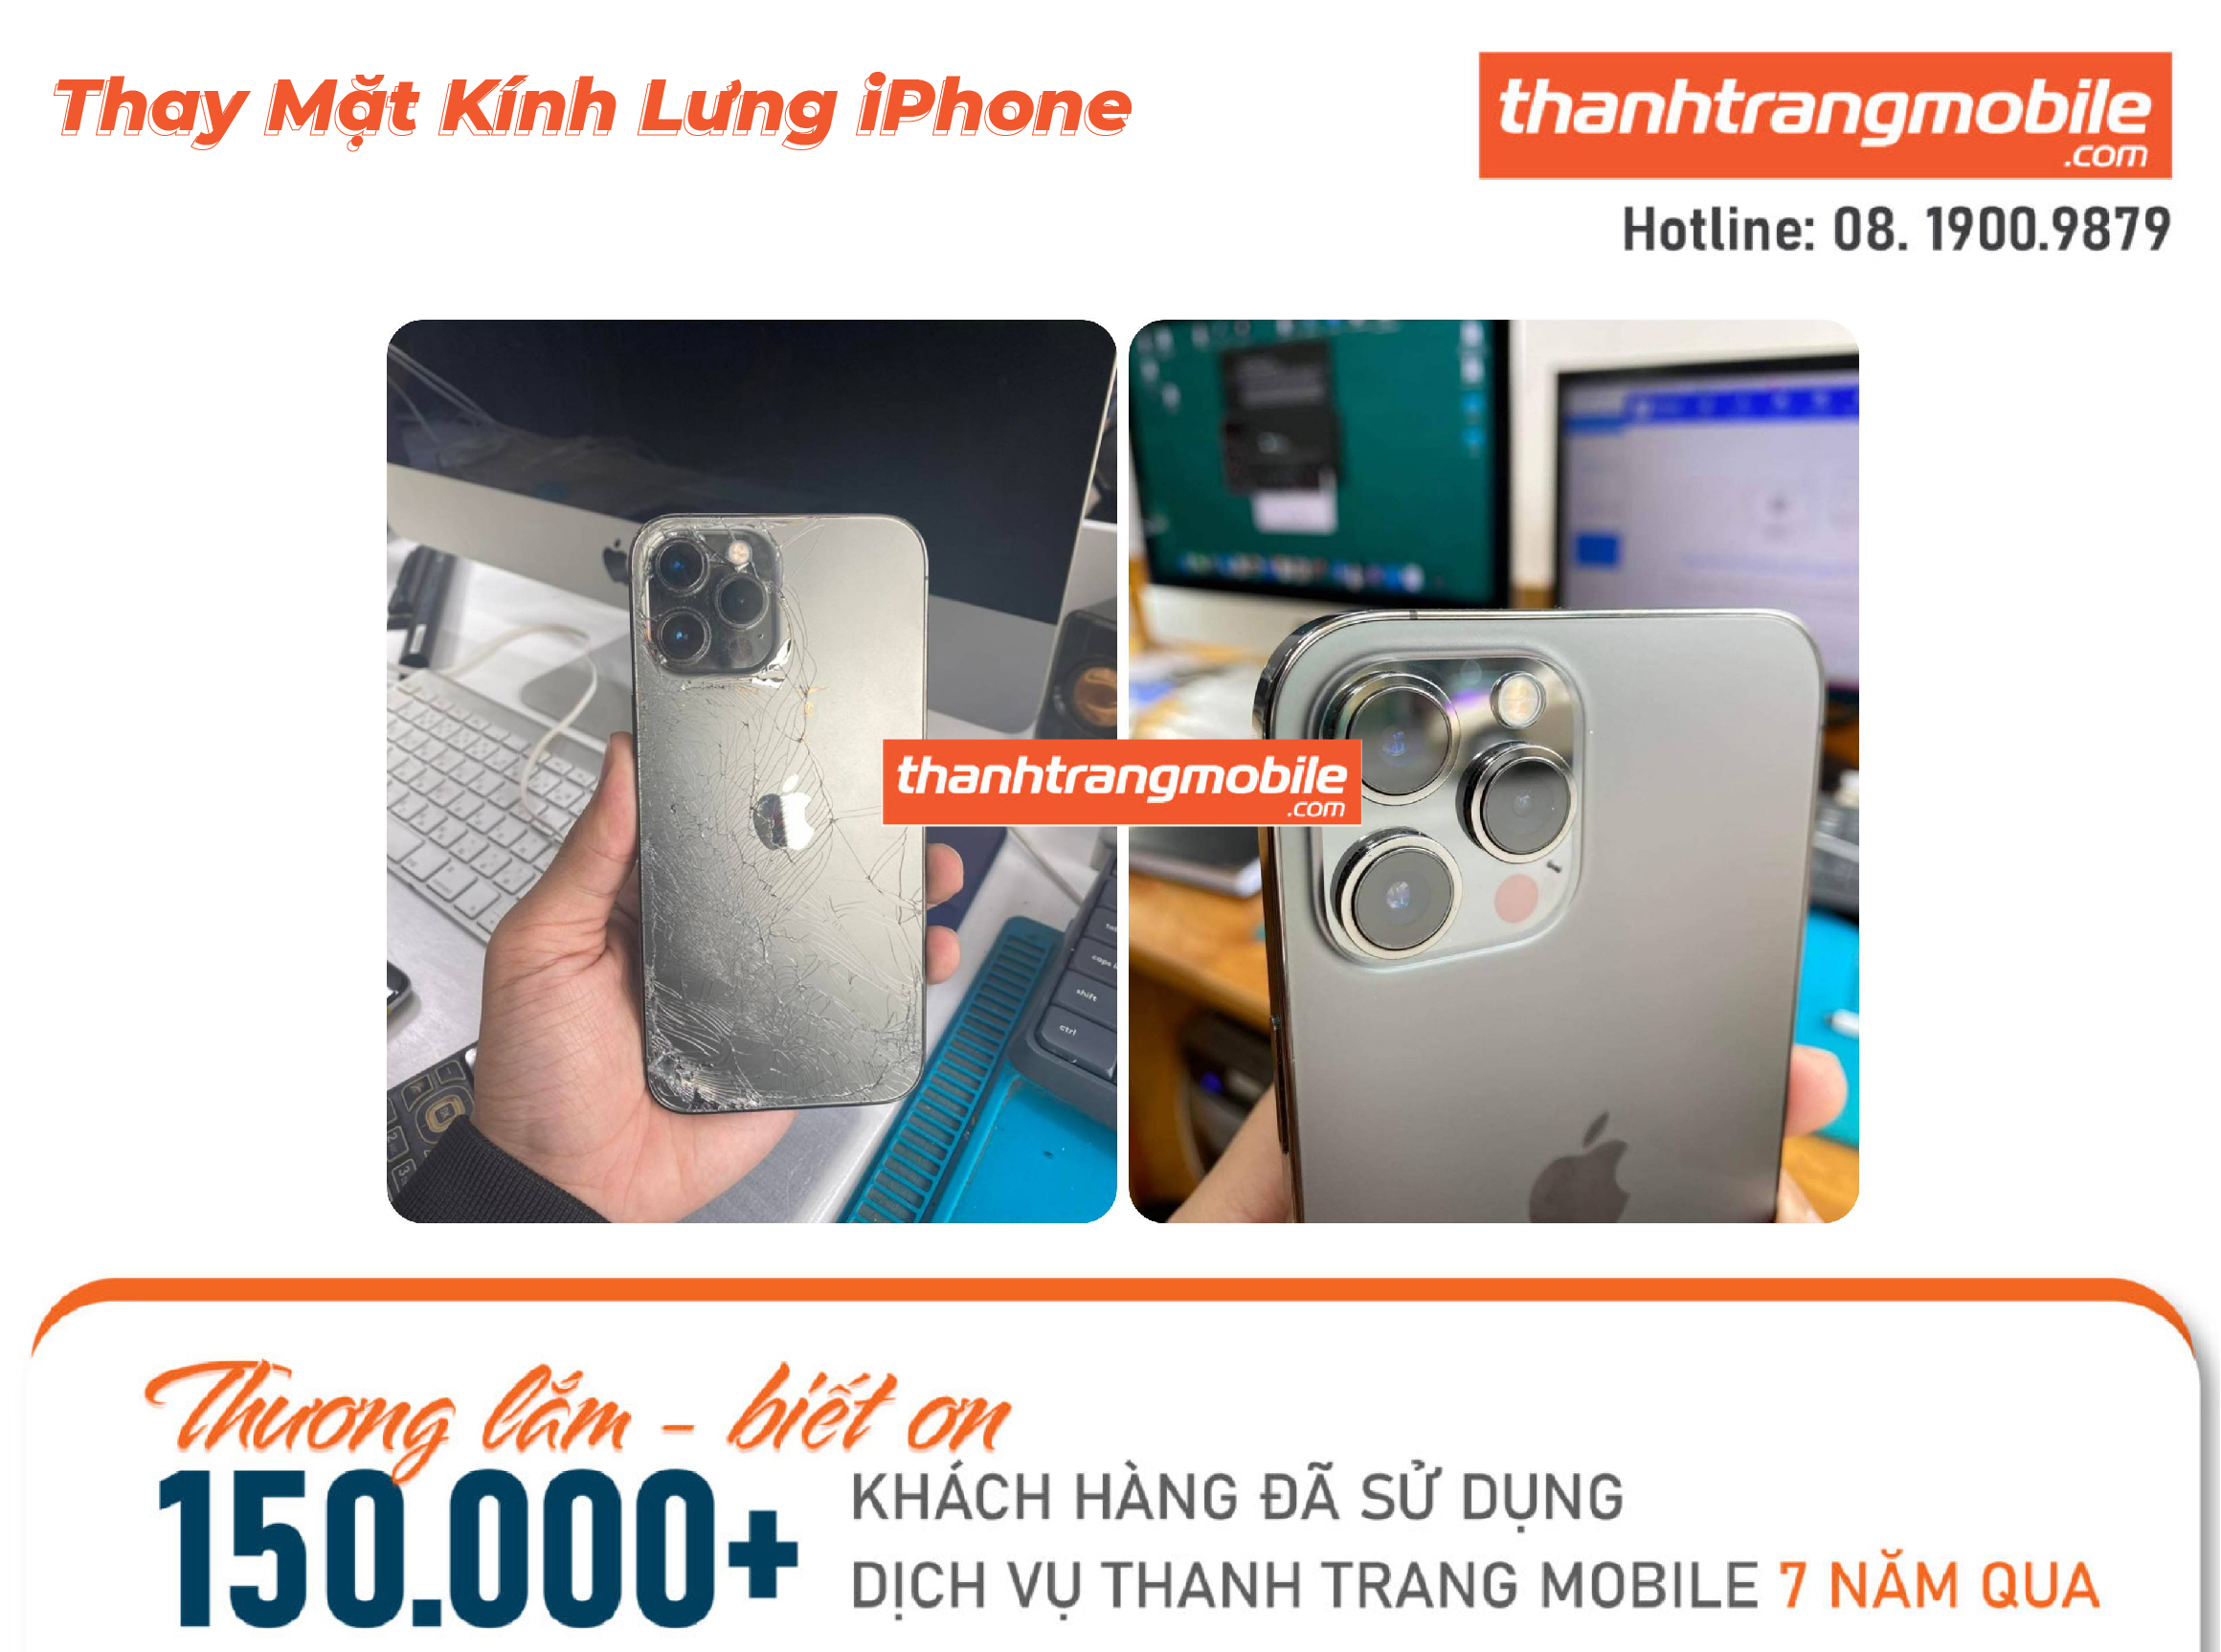 thay-mat-kinh-lung-iphone-thanhtrangmobile_1@4x-100 Thay Kính Lưng iPhone 12 Pro Max